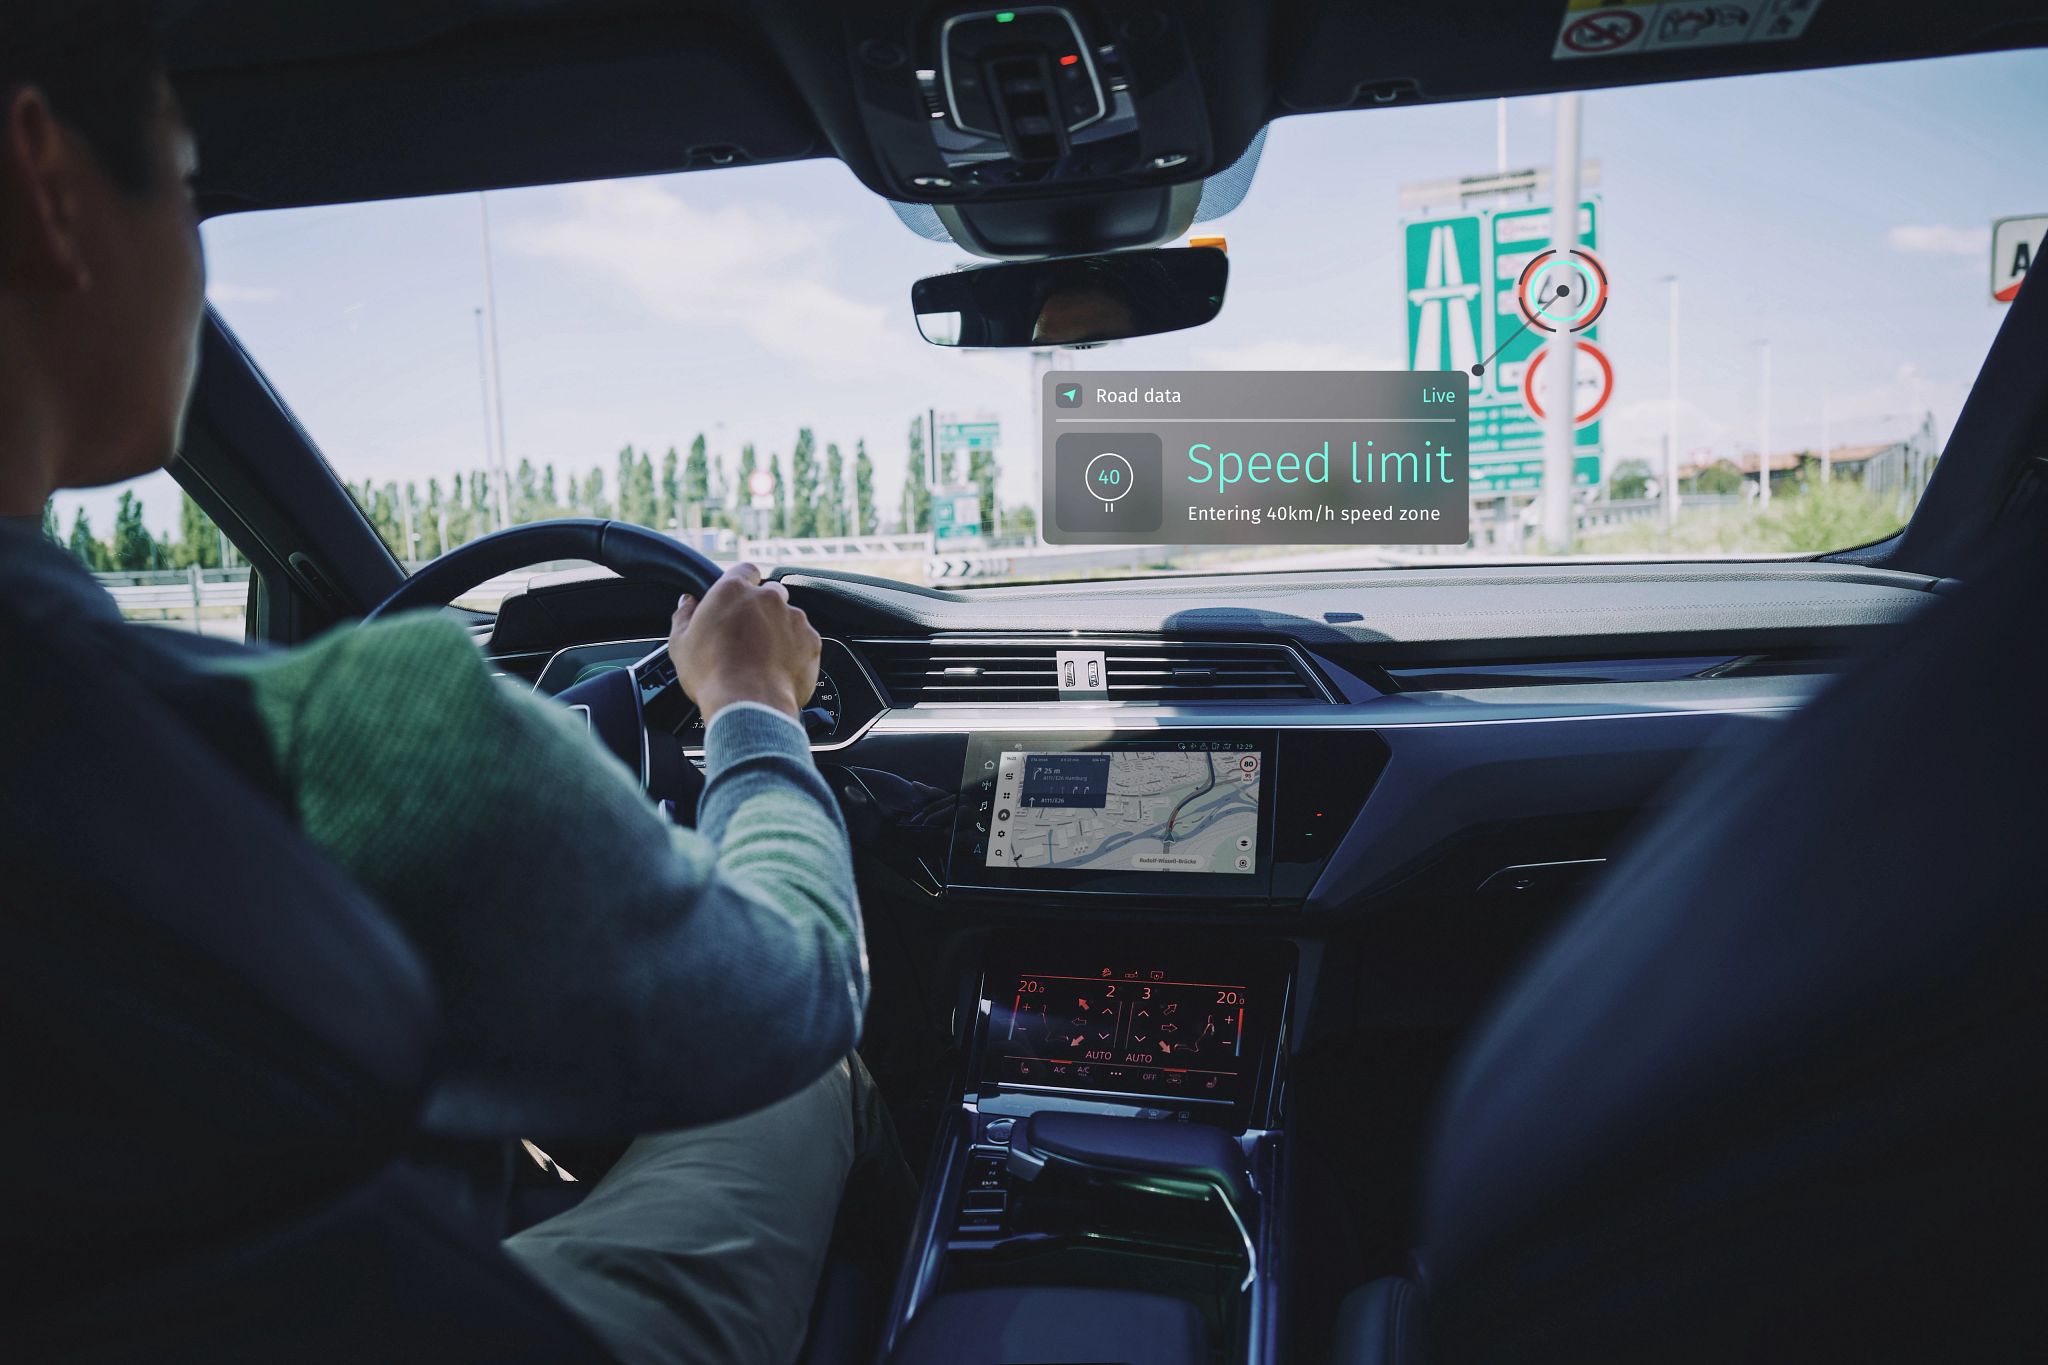 Milan-Car-Dashboard-Overlay-ISA-Speed-Limit-Vehicle-Automotive